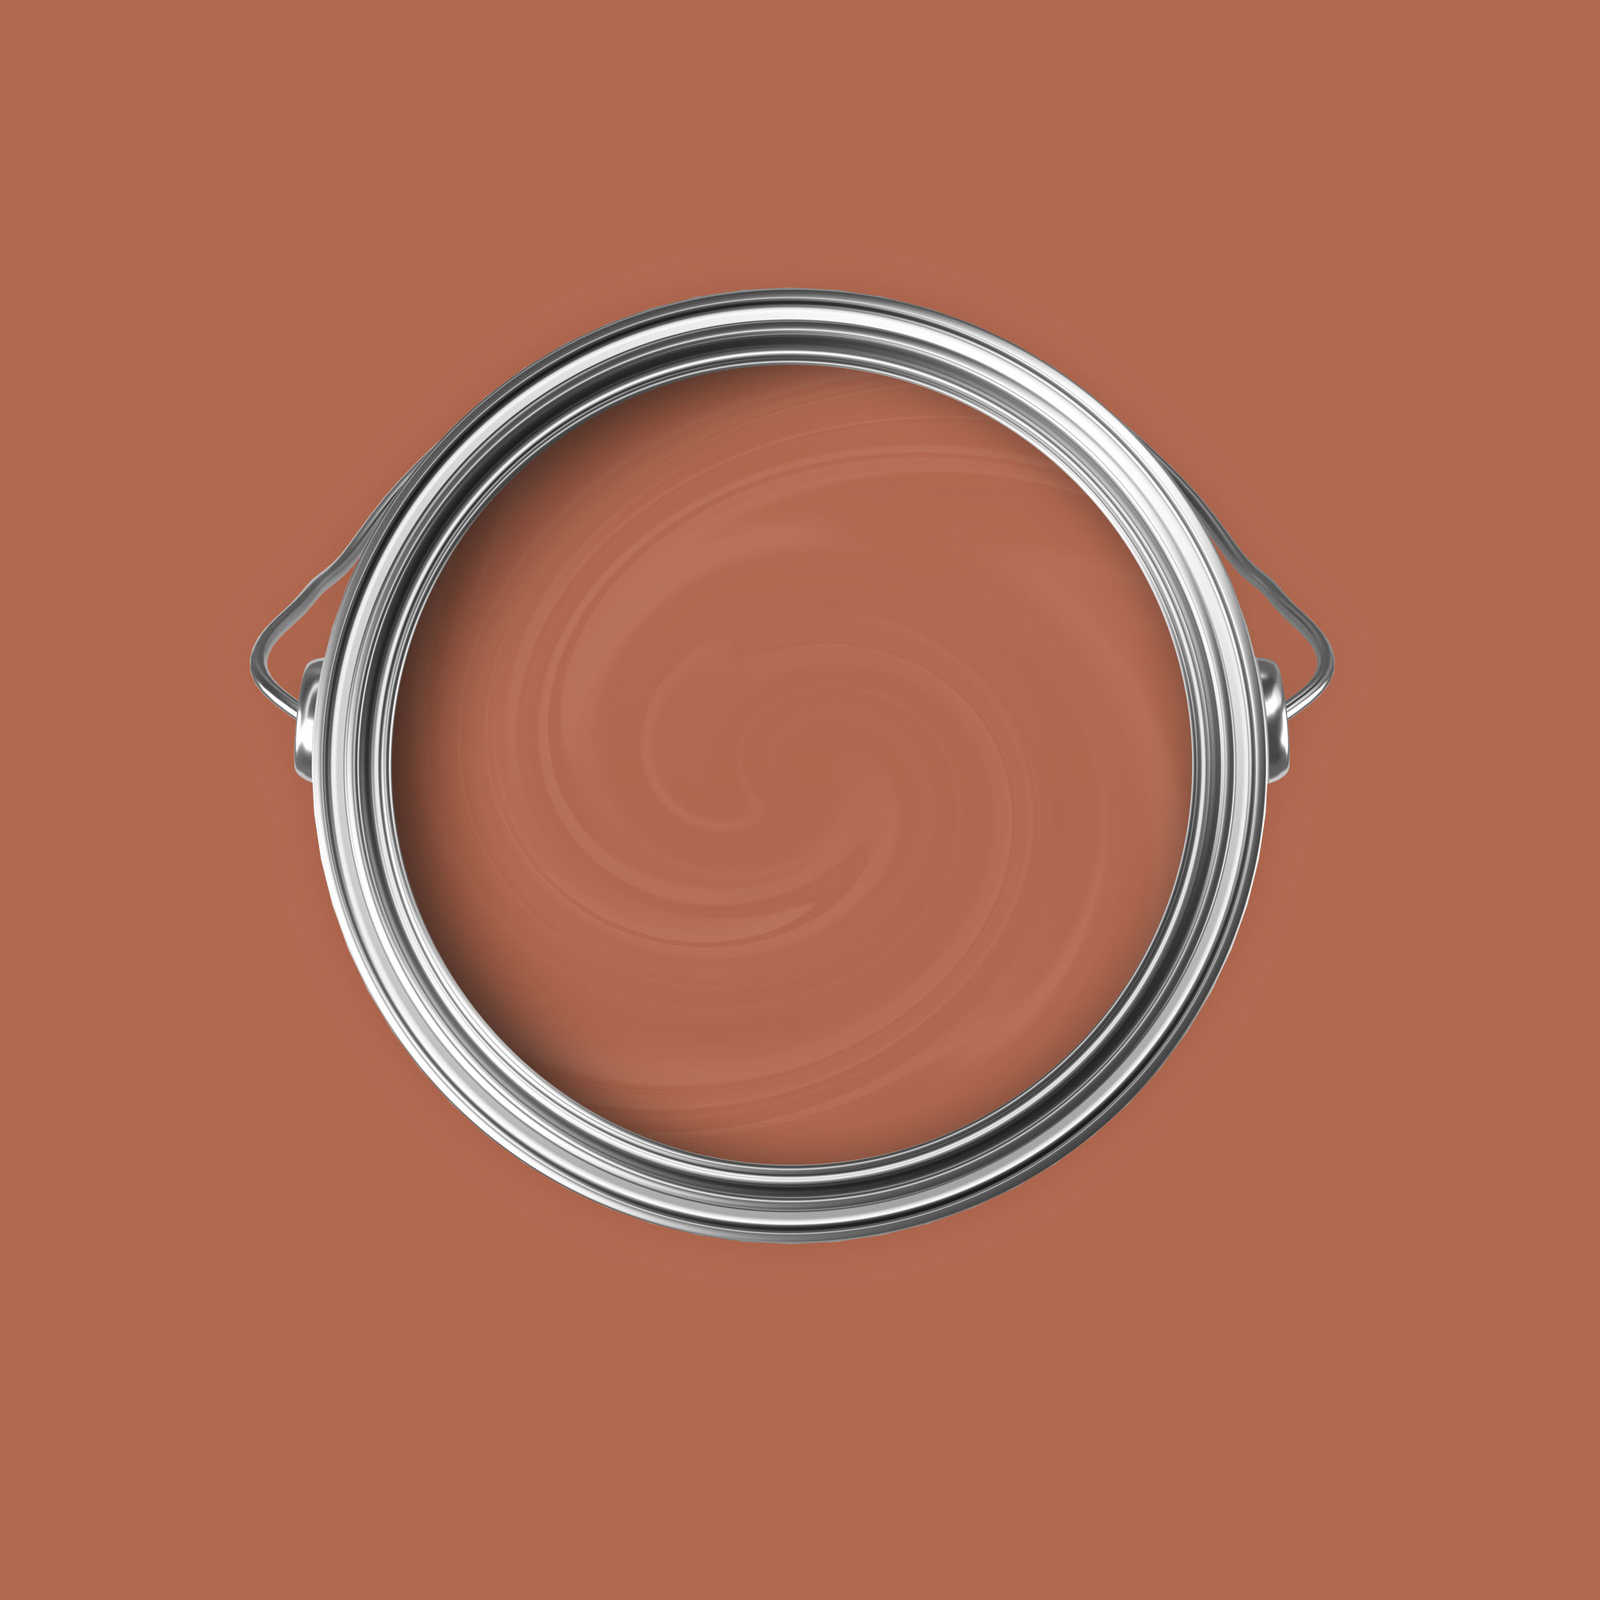             Premium Muurverf Sensitive Terracotta »Pretty Peach« NW908 – 5 liter
        